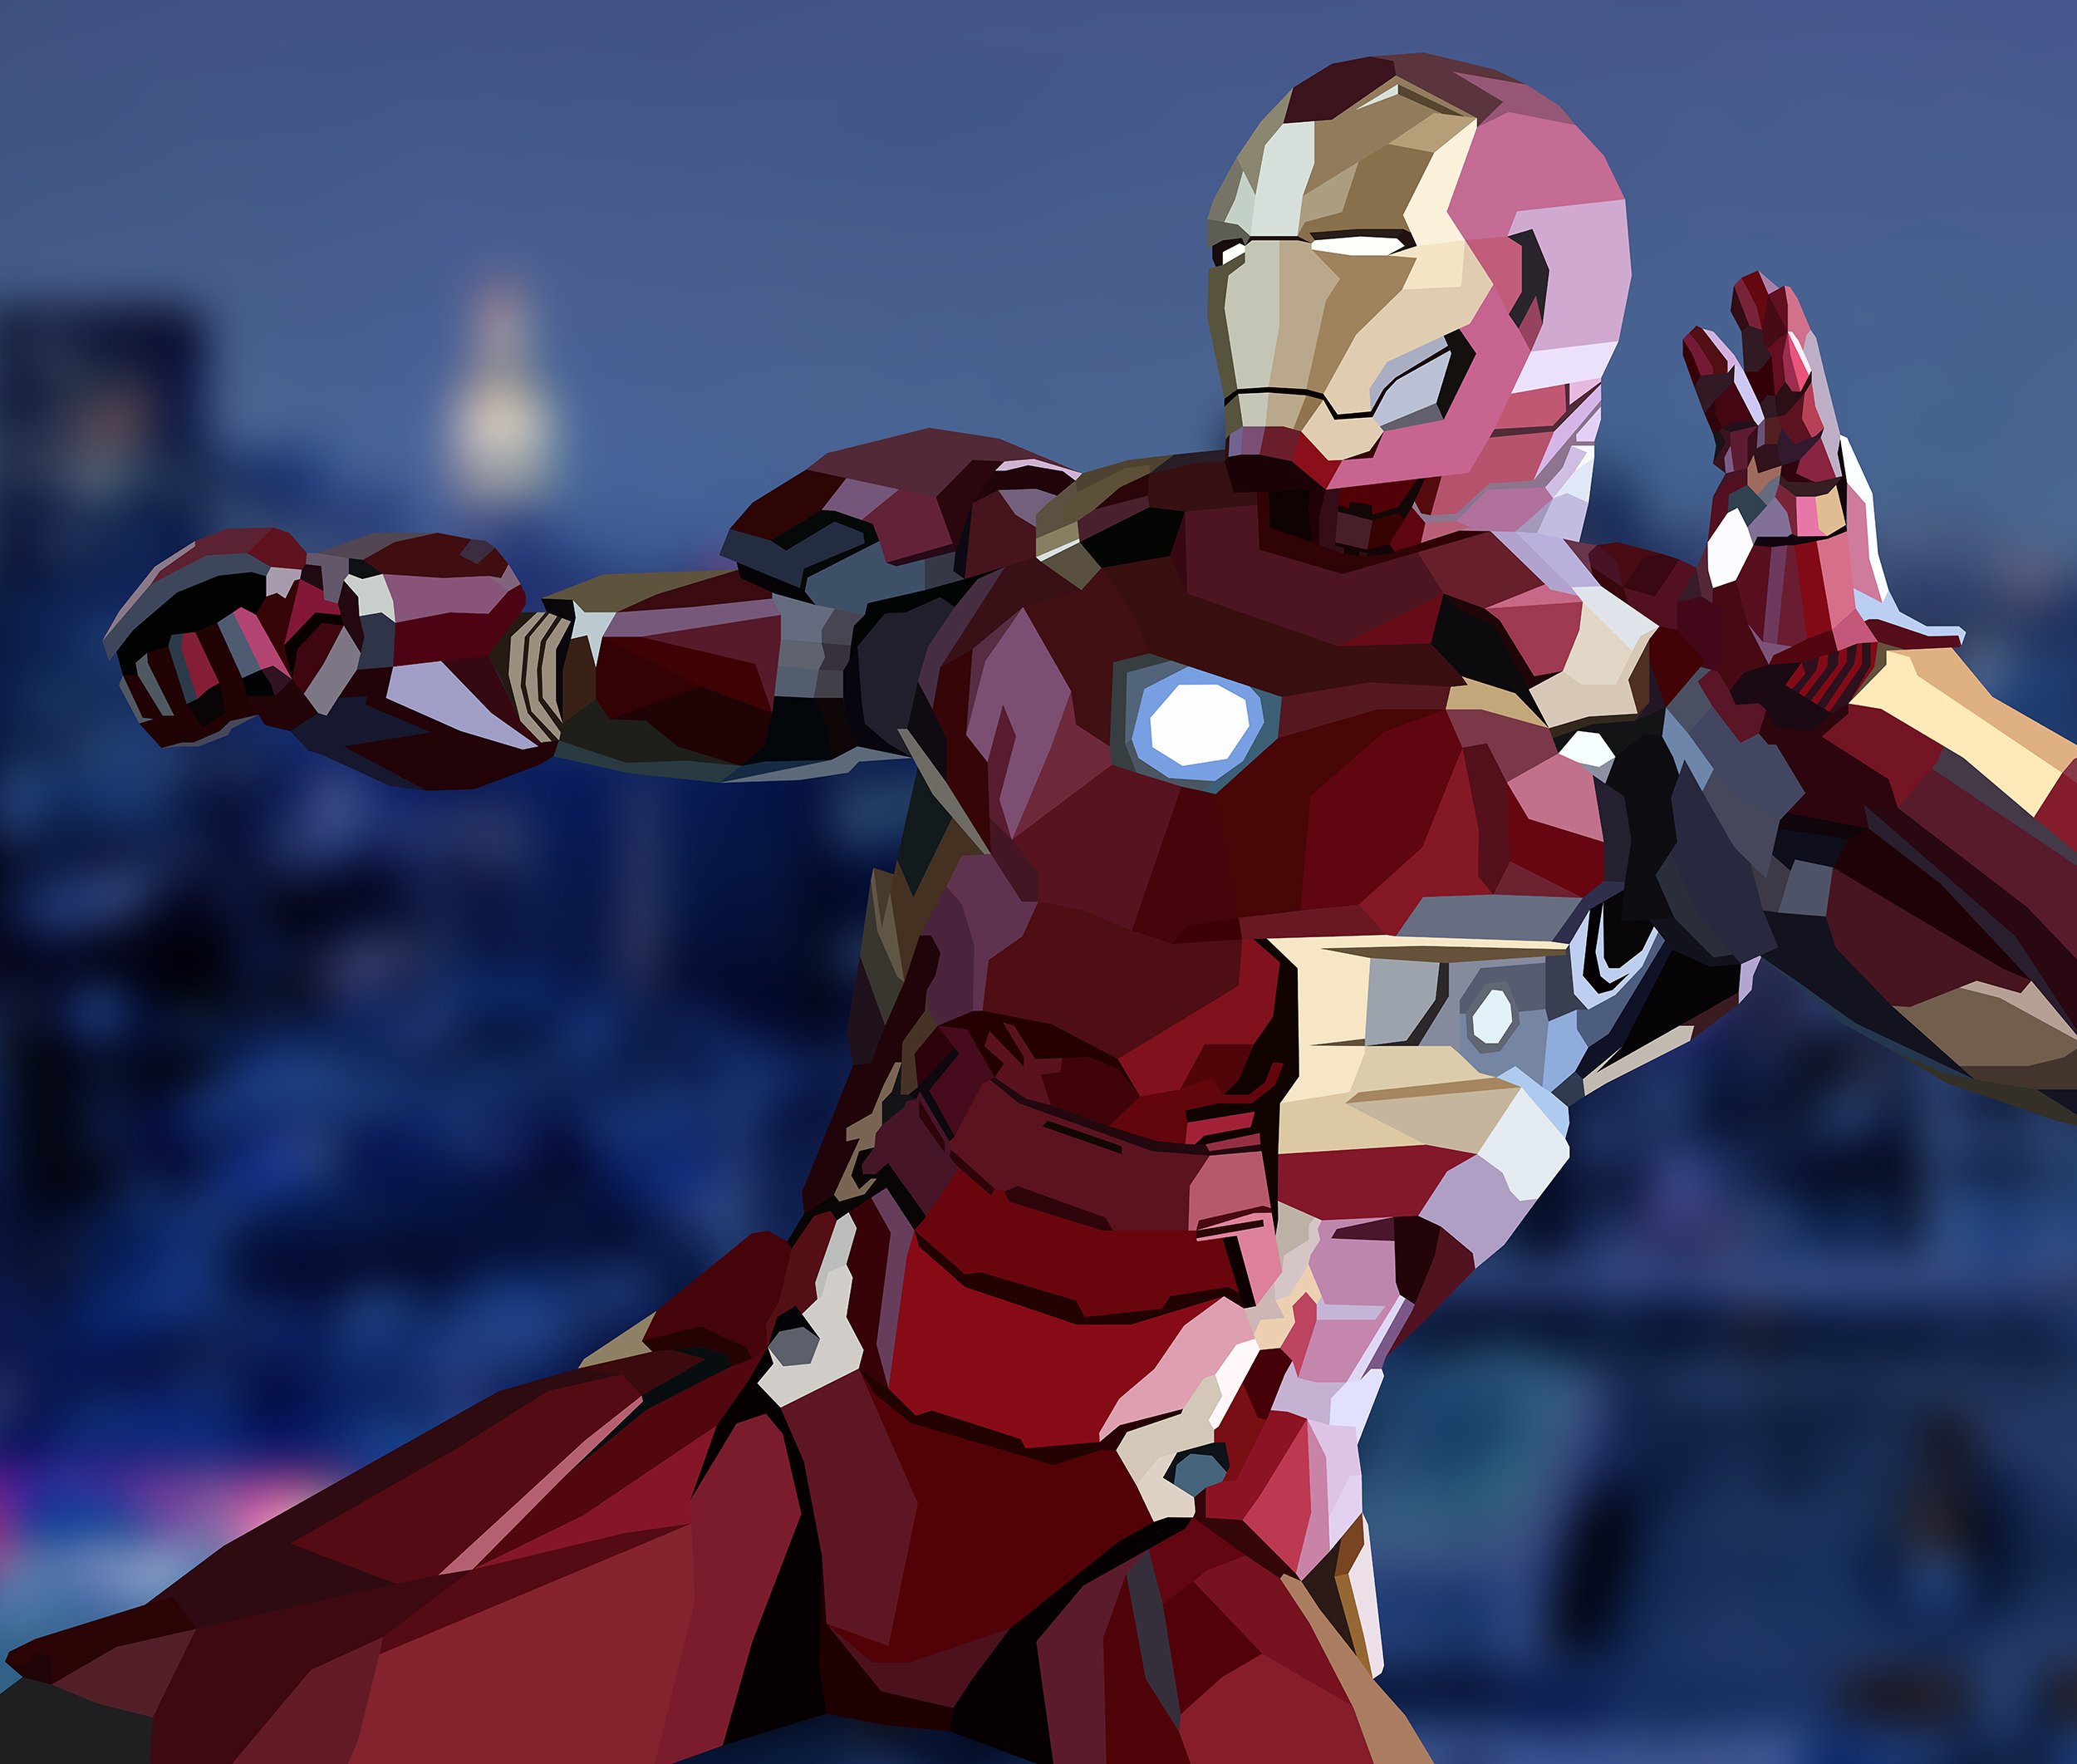 Iron Man.jpg